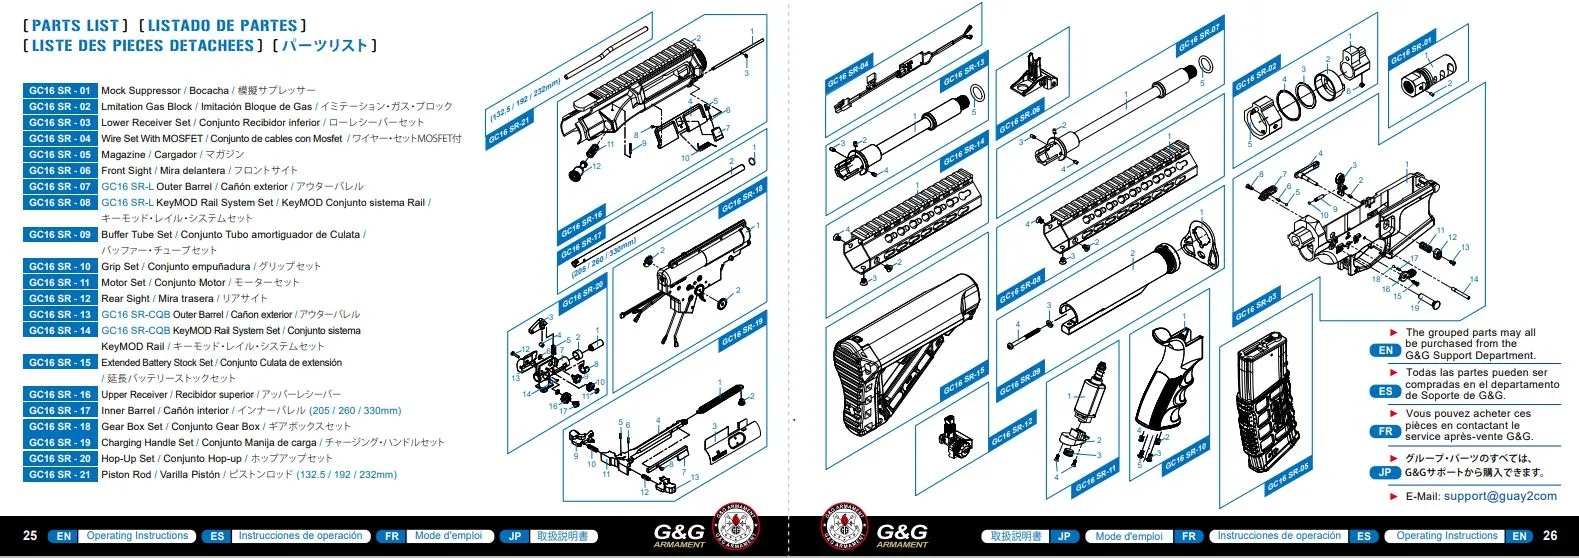 Spare Part GC16 SR-03 #4,11,12,13 - Magazine release set for GC16 SR Series - G&G